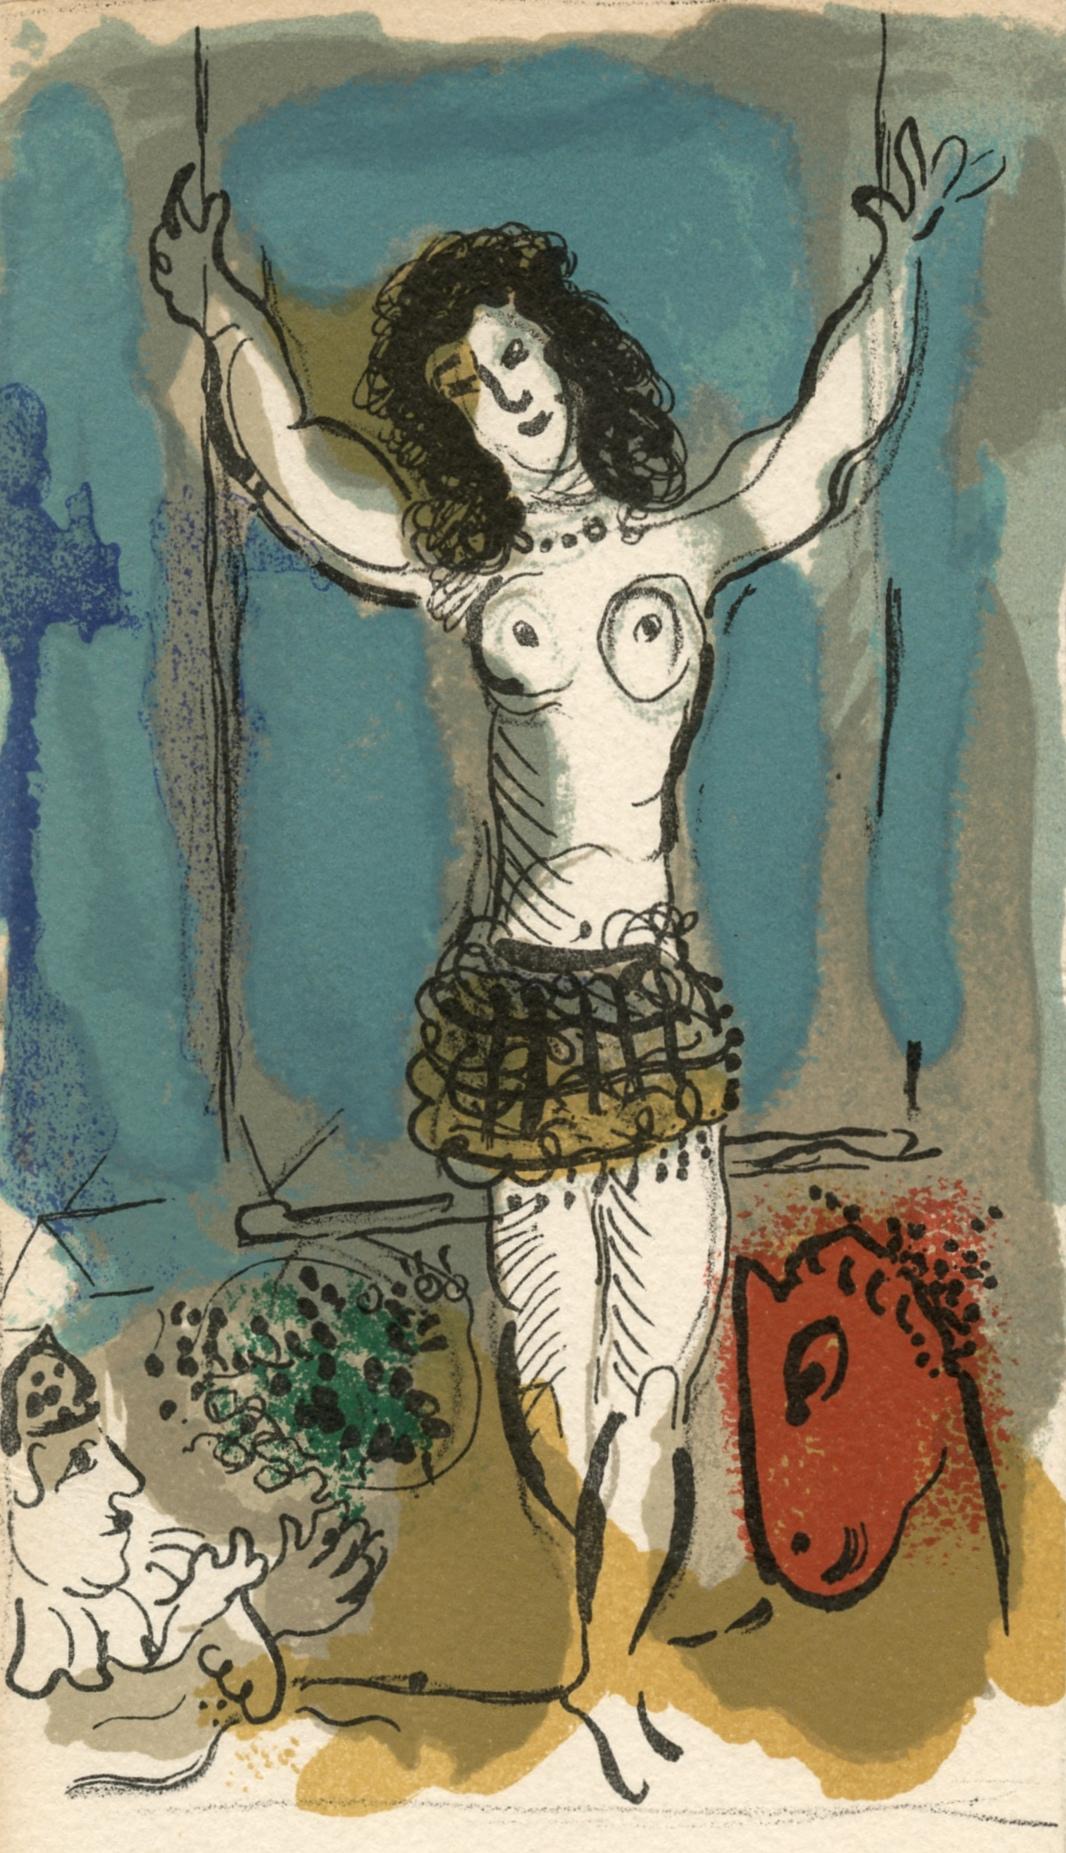 Marc Chagall Portrait Print - original lithograph